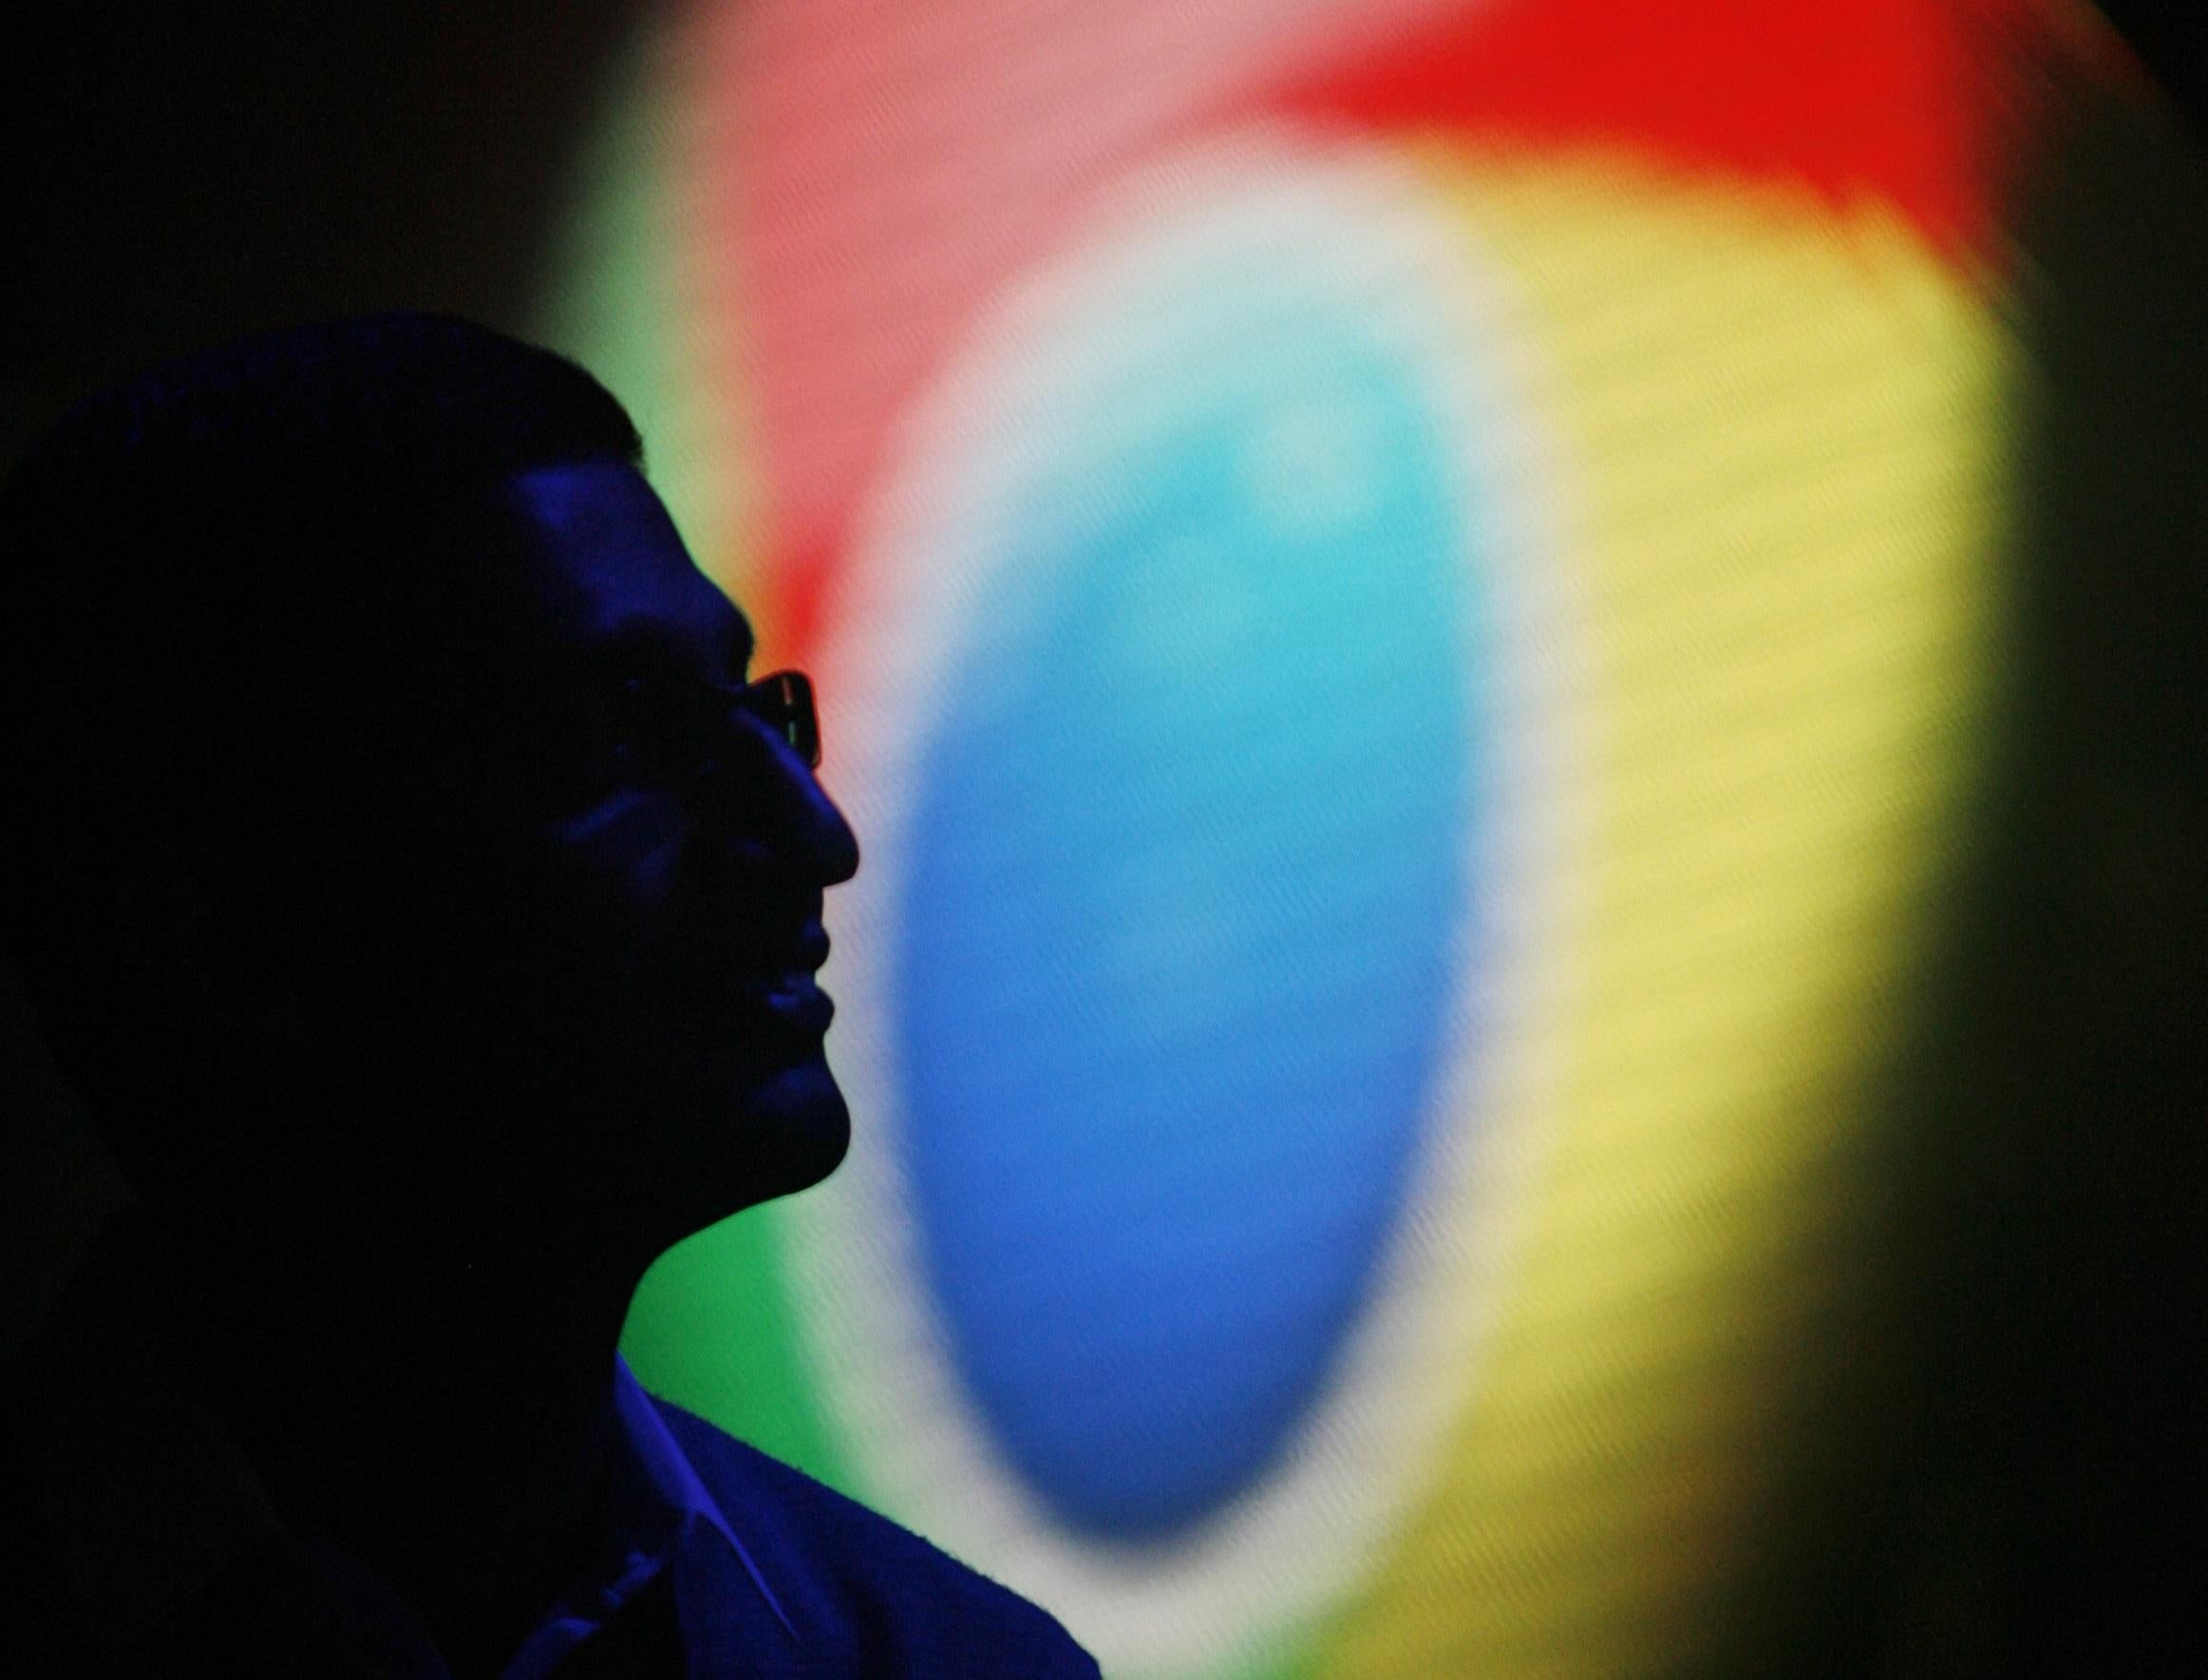 A Chrome logo seen behind Google CEO Sundar Pichai in San Francisco on 28 June, 2012